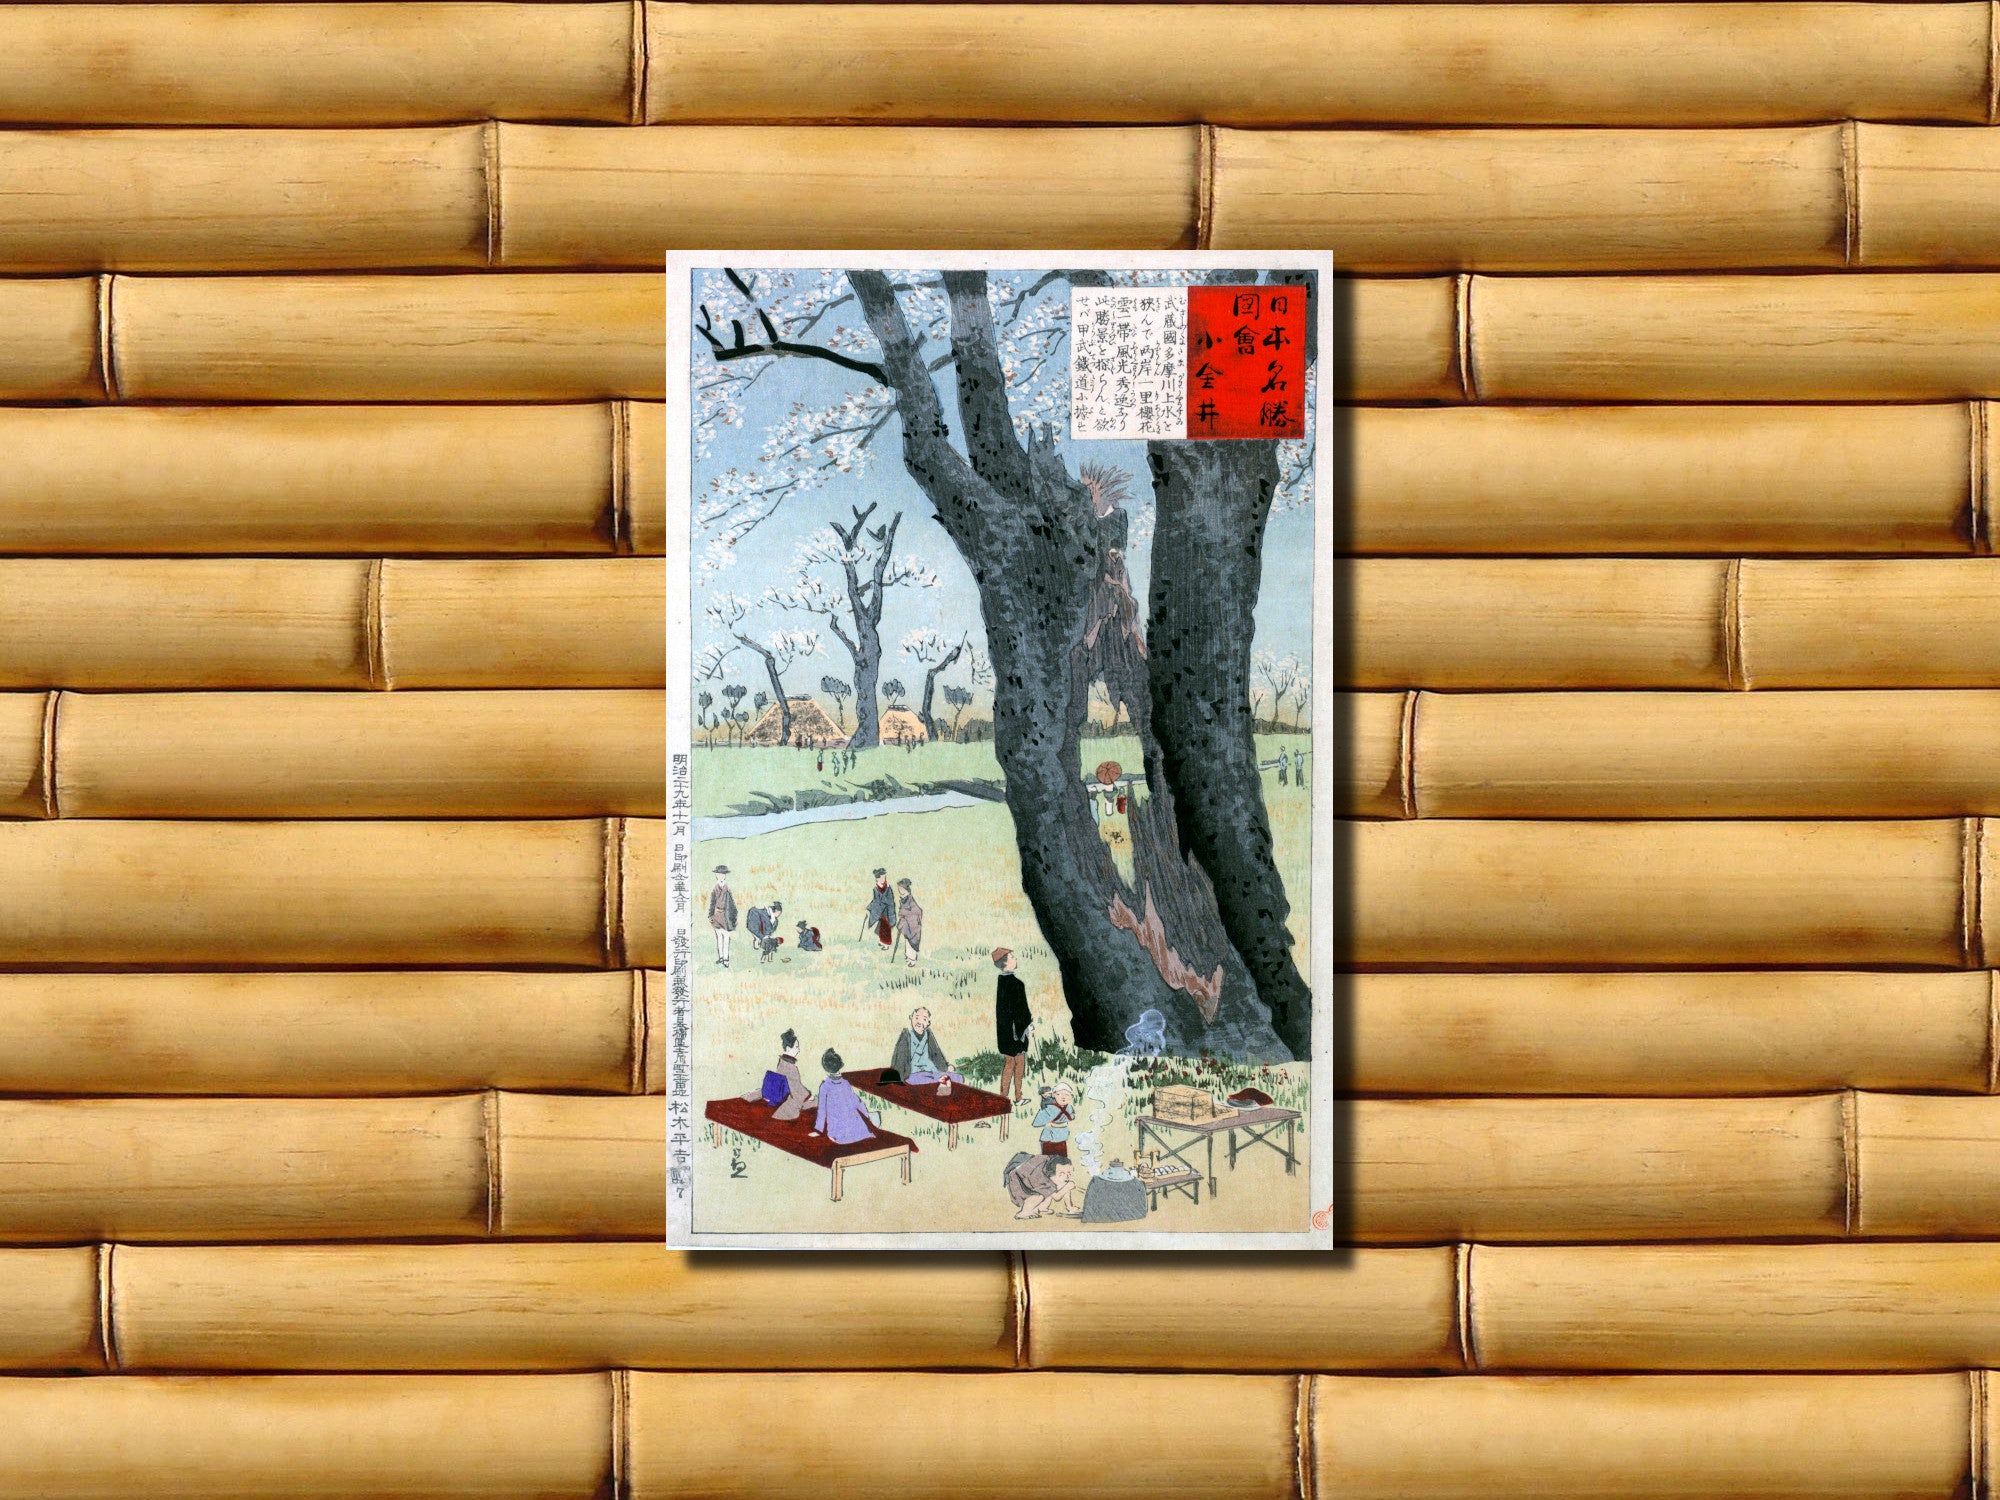 Kobayashi Kiyochika, Japanese Art Print : One Hundred Views of Musashi, 13